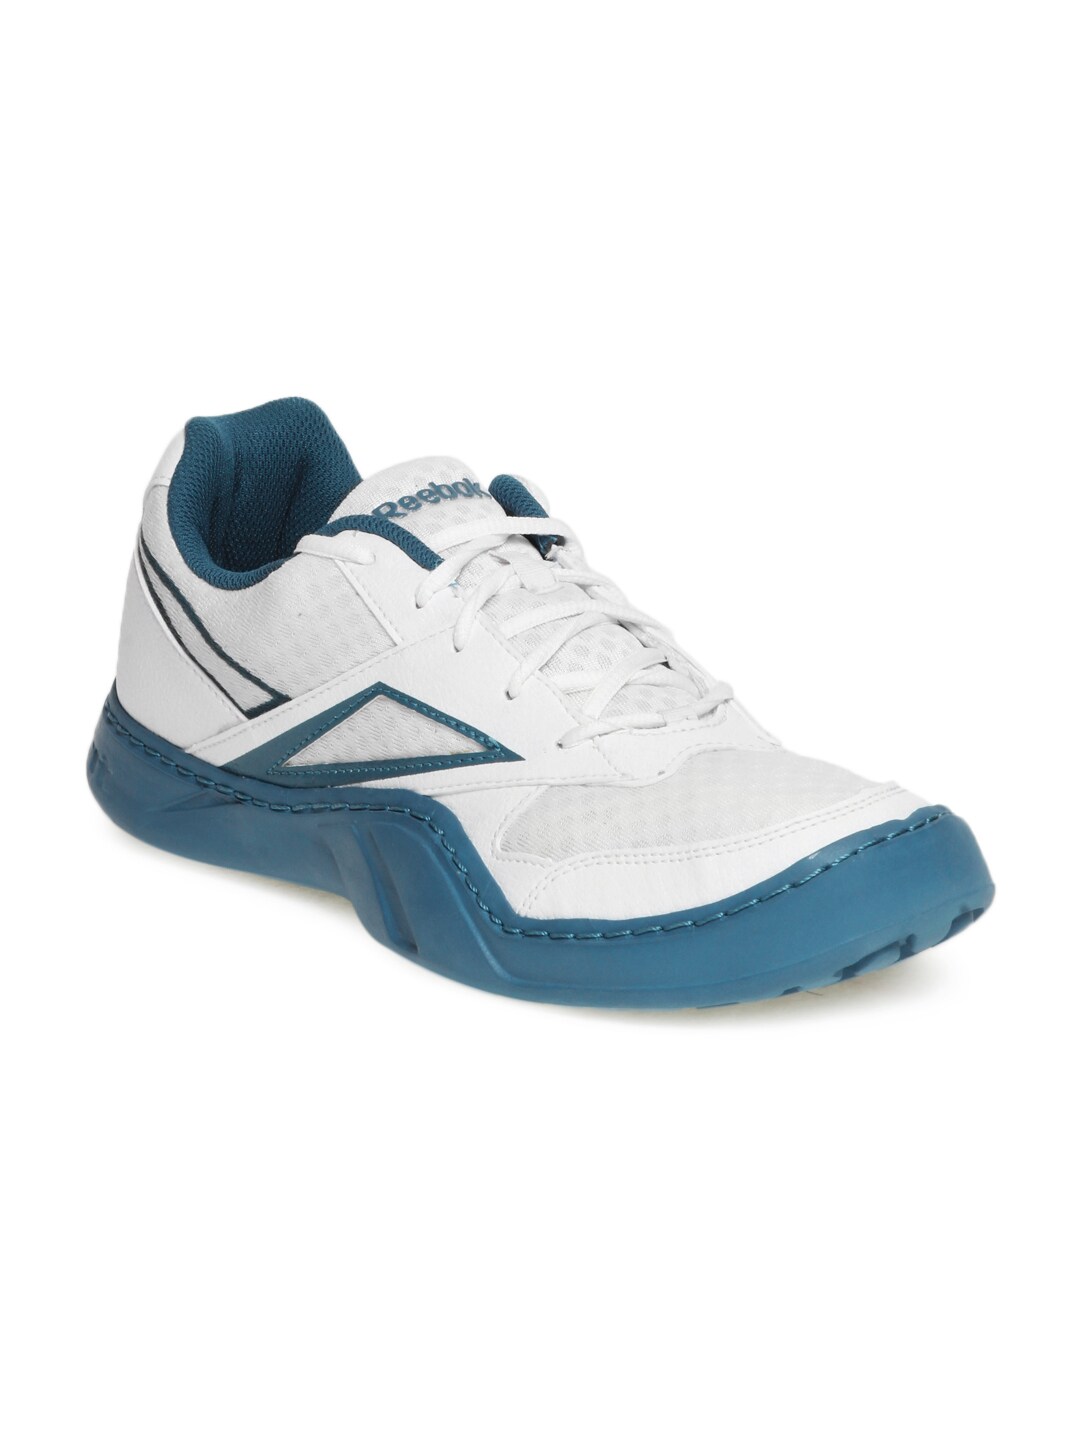 Reebok Men White Gravity Trainer Sports Shoes